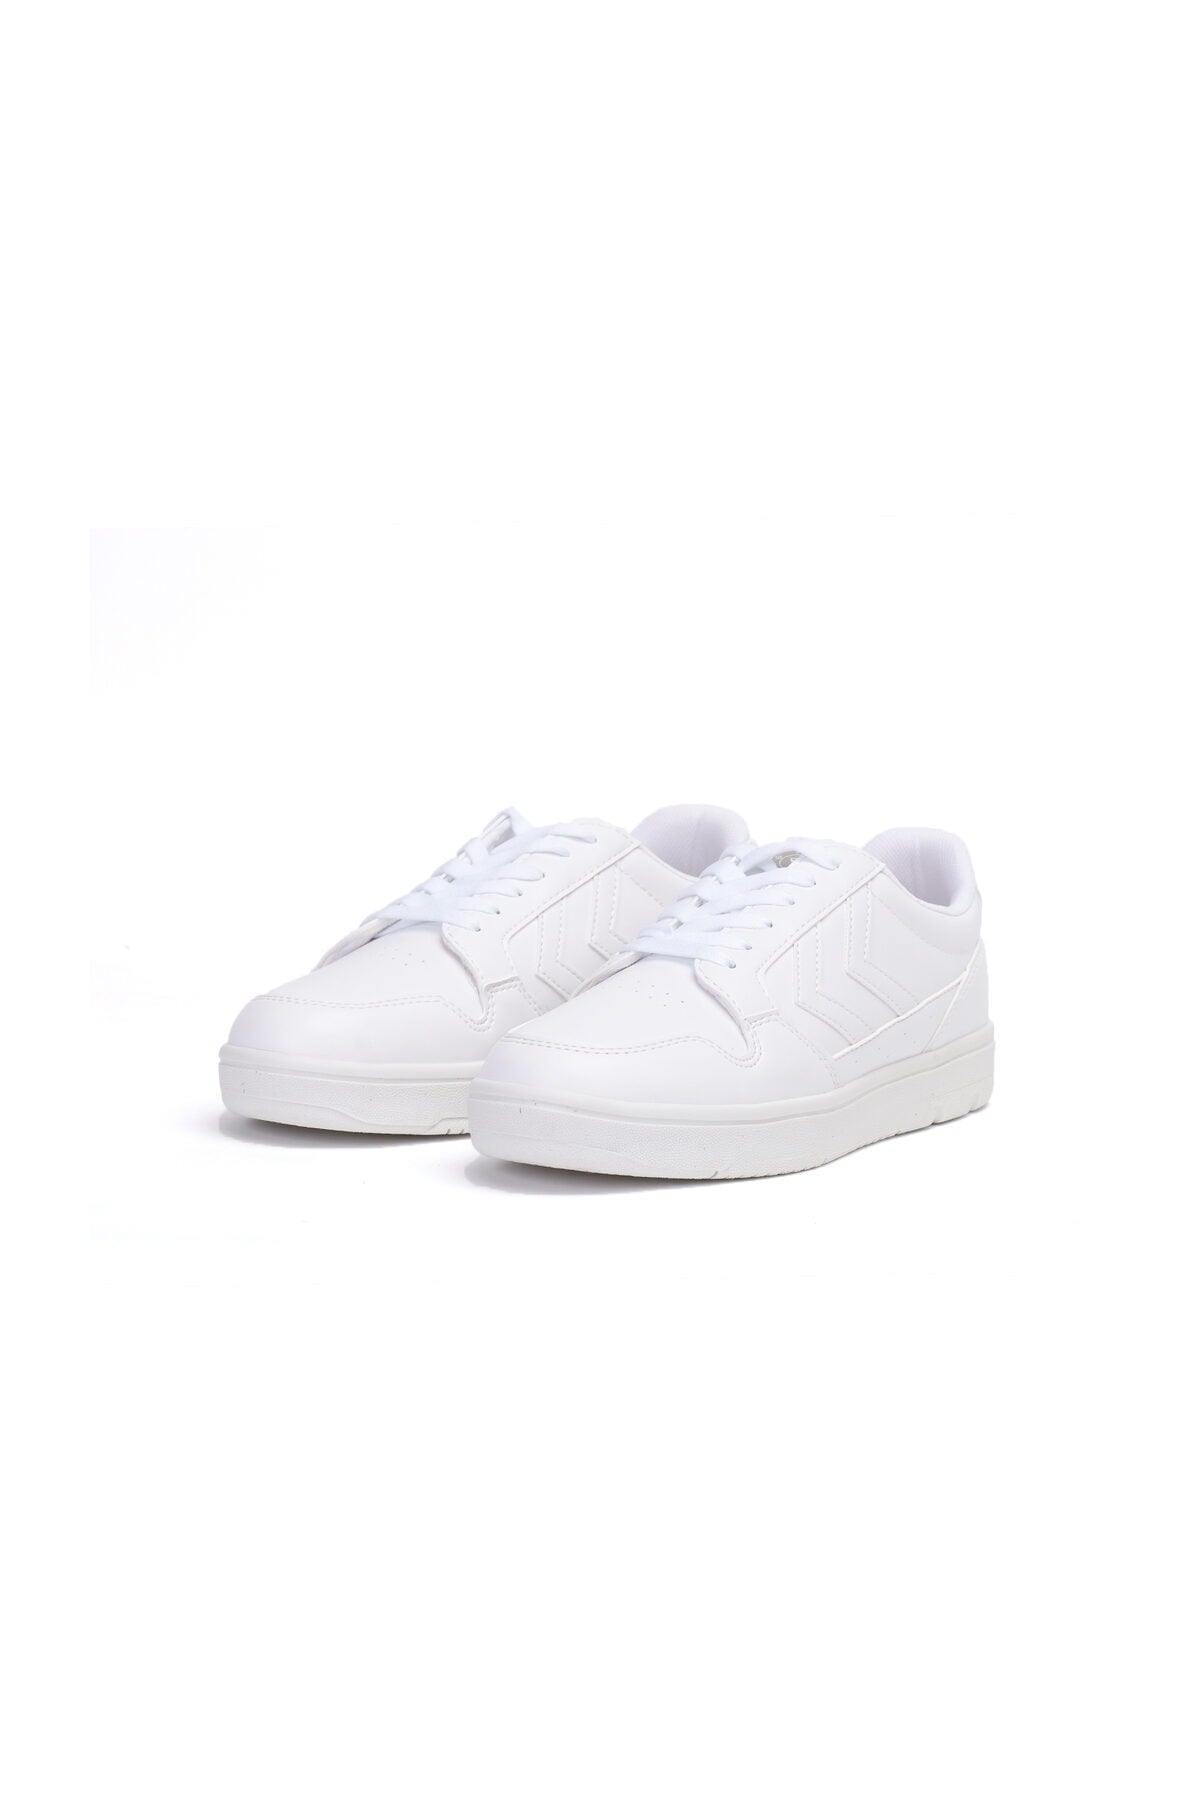 Nielsen - Unisex White Shoes